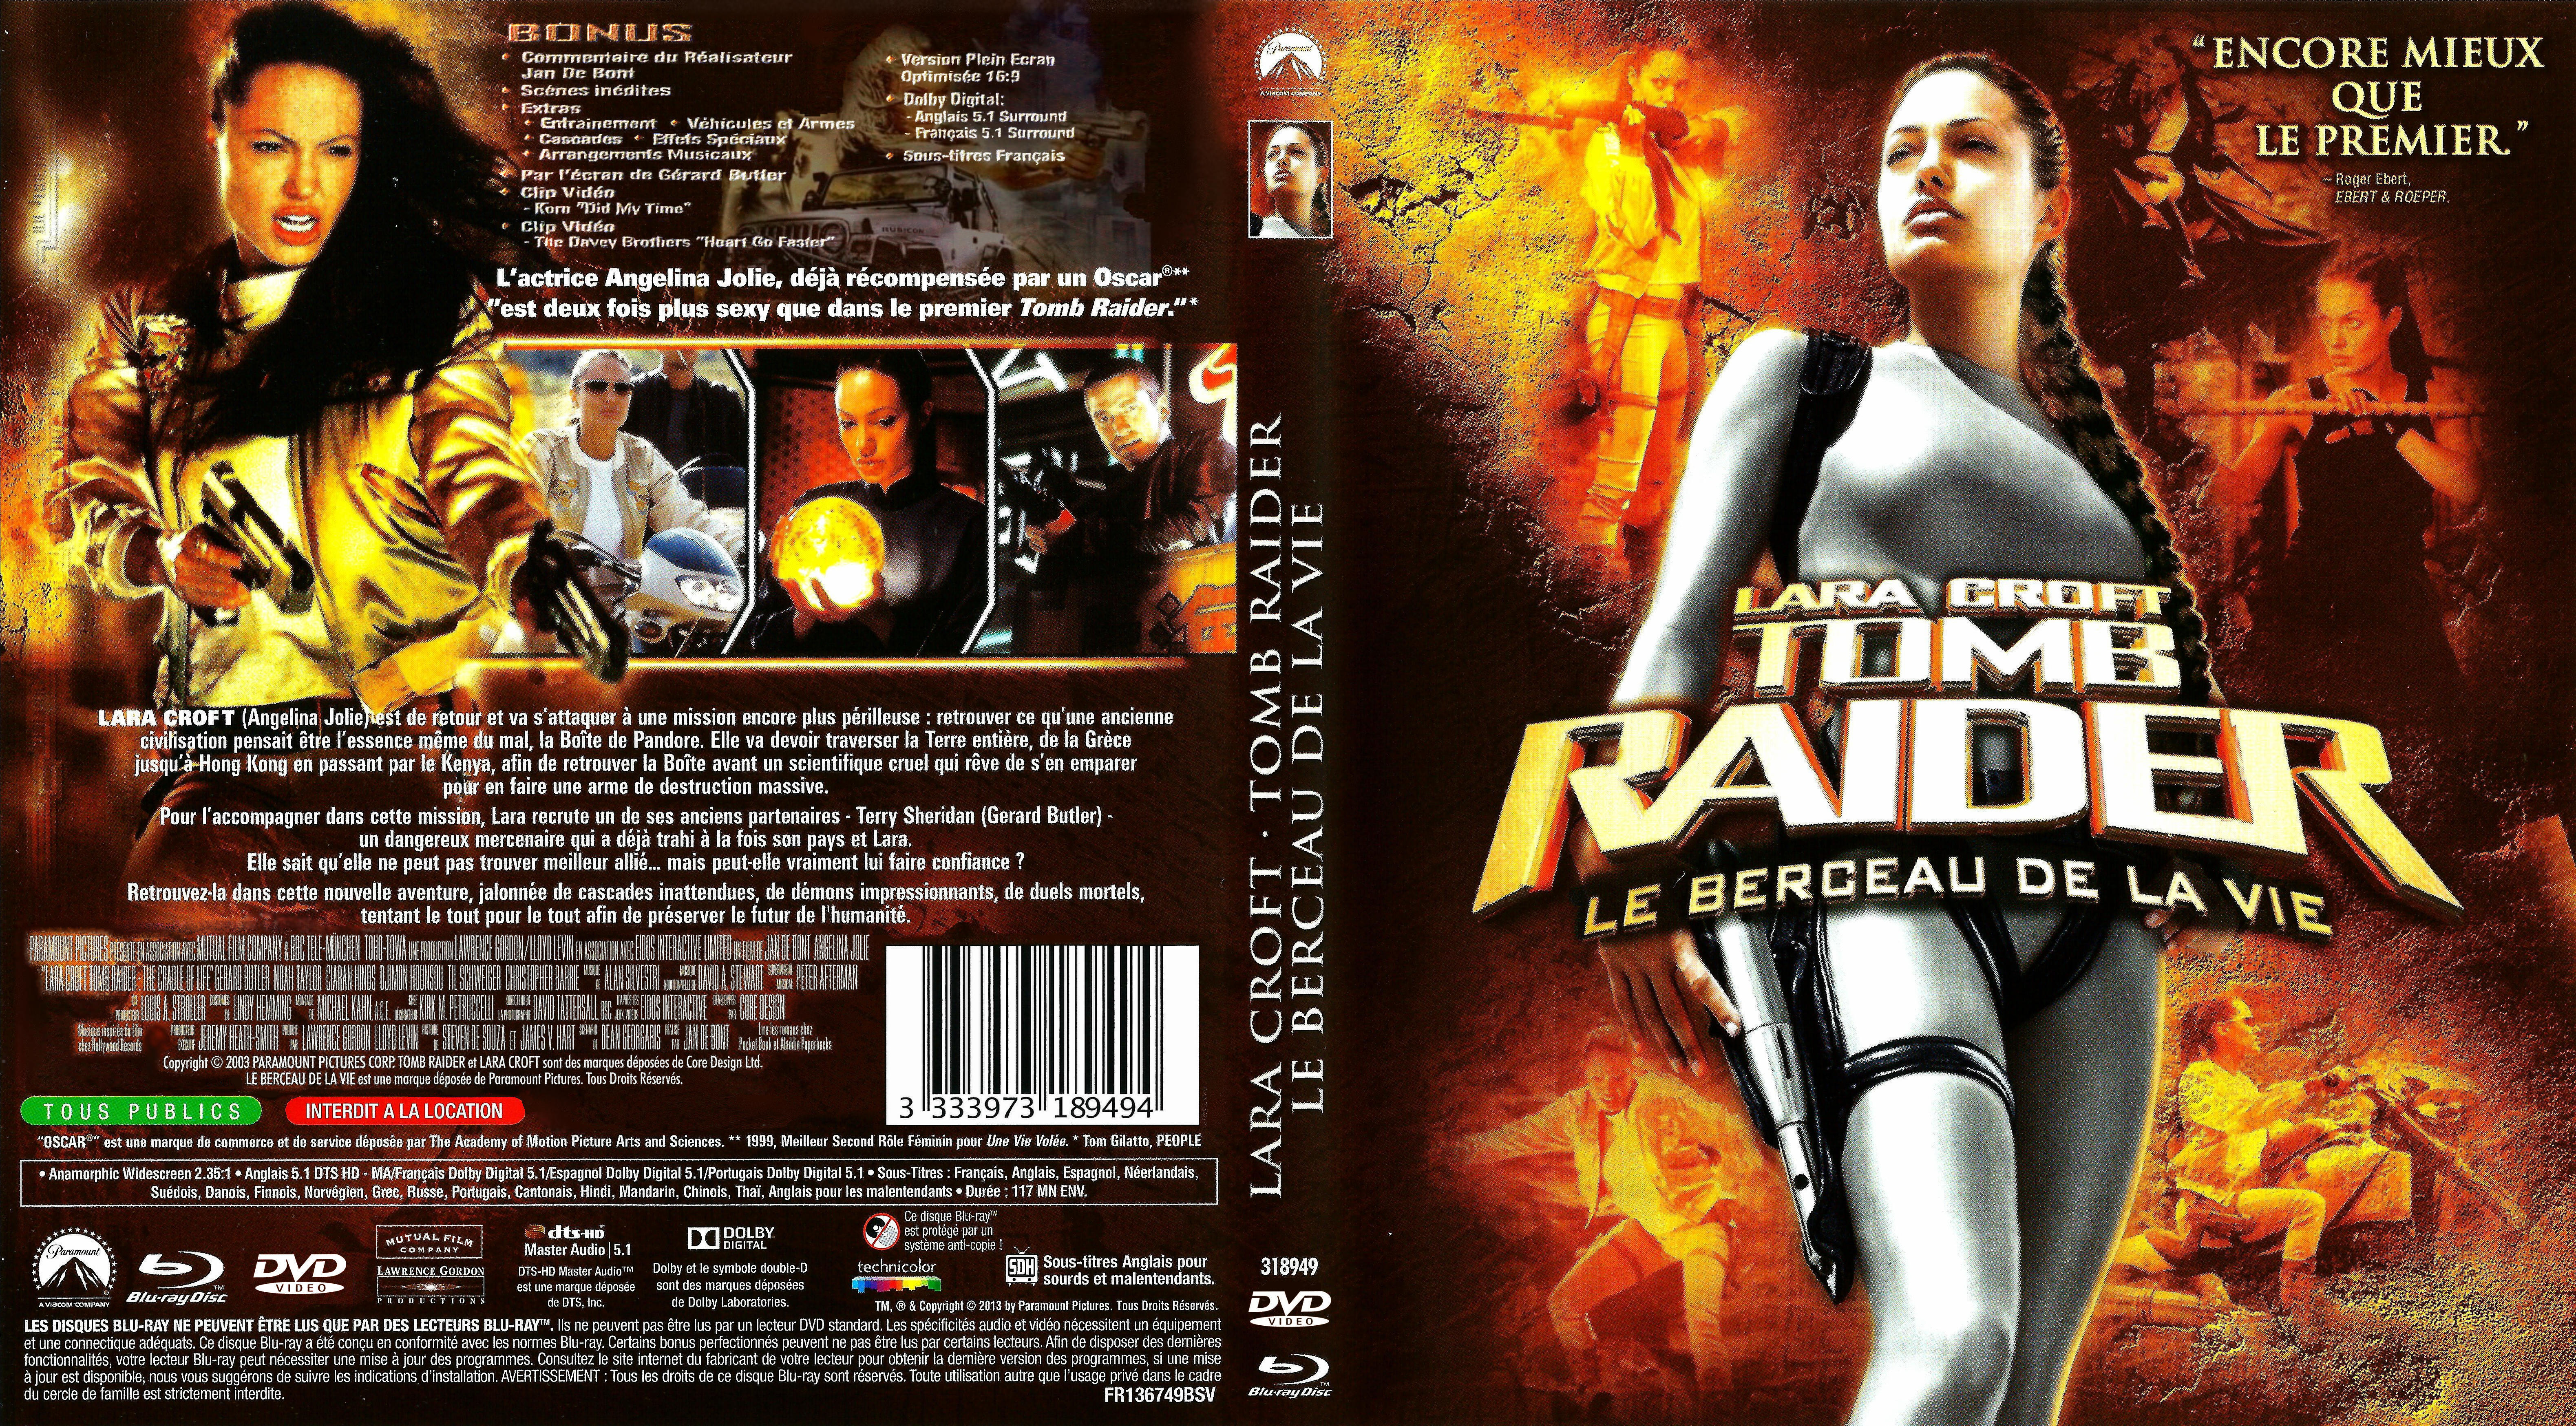 Jaquette DVD Tomb Raider le berceau de la vie (BLU-RAY) v2